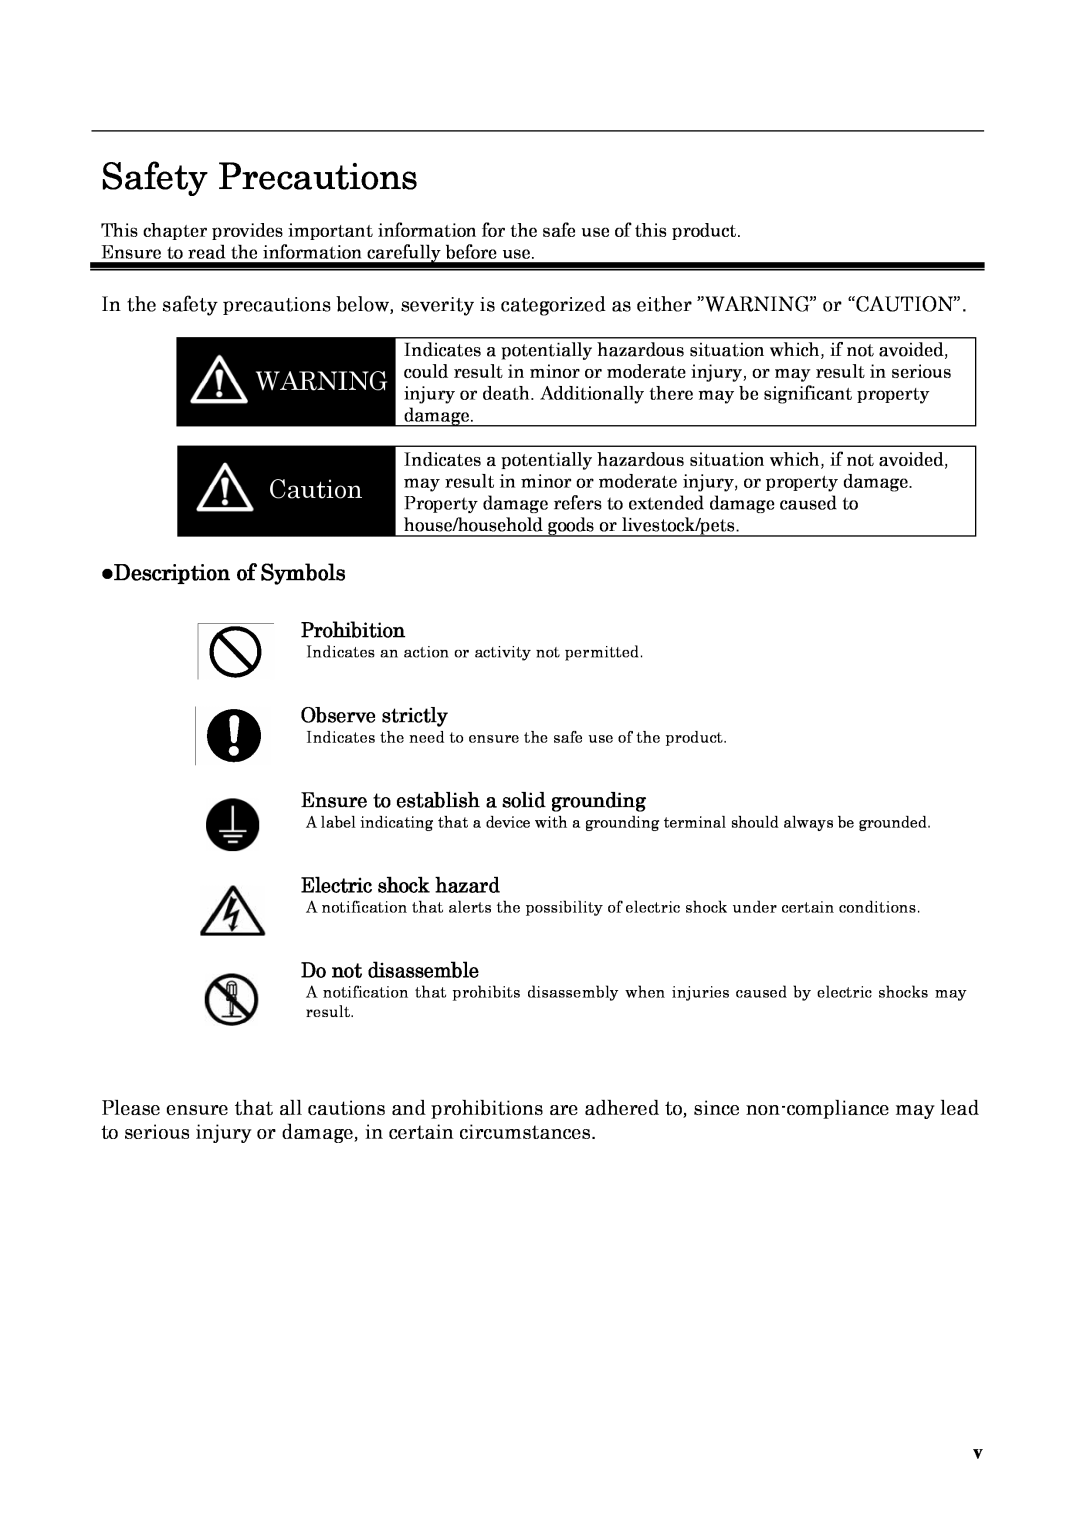 Omron V720-HS04 Safety Precautions, Description of Symbols, Prohibition, Observe strictly, Electric shock hazard 